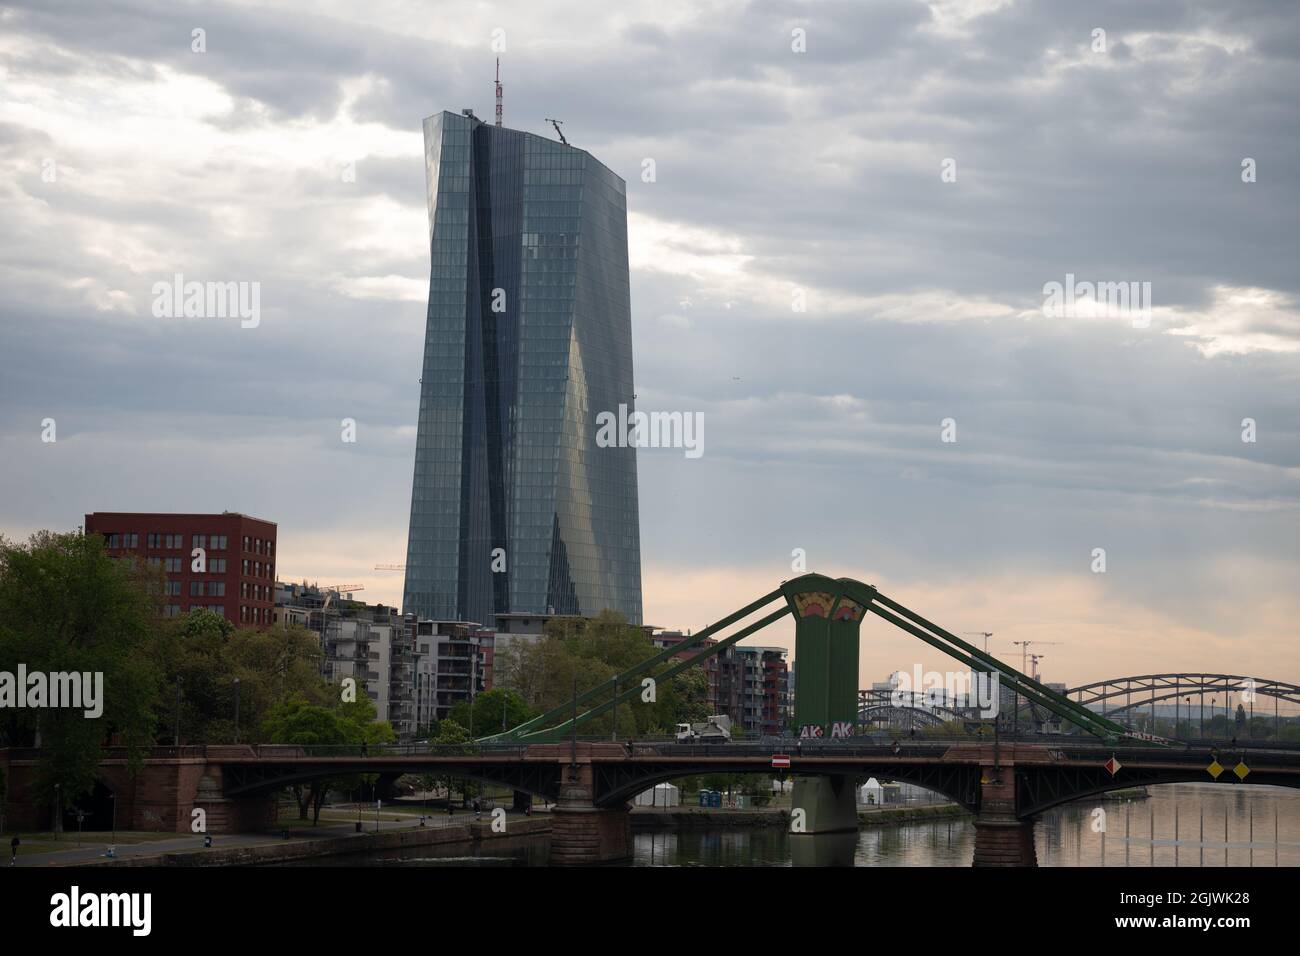 Frankfurt,Germany - April 24 2021: The European Central Bank is the central bank for the euro and administers monetary policy of the eurozone. Stock Photo